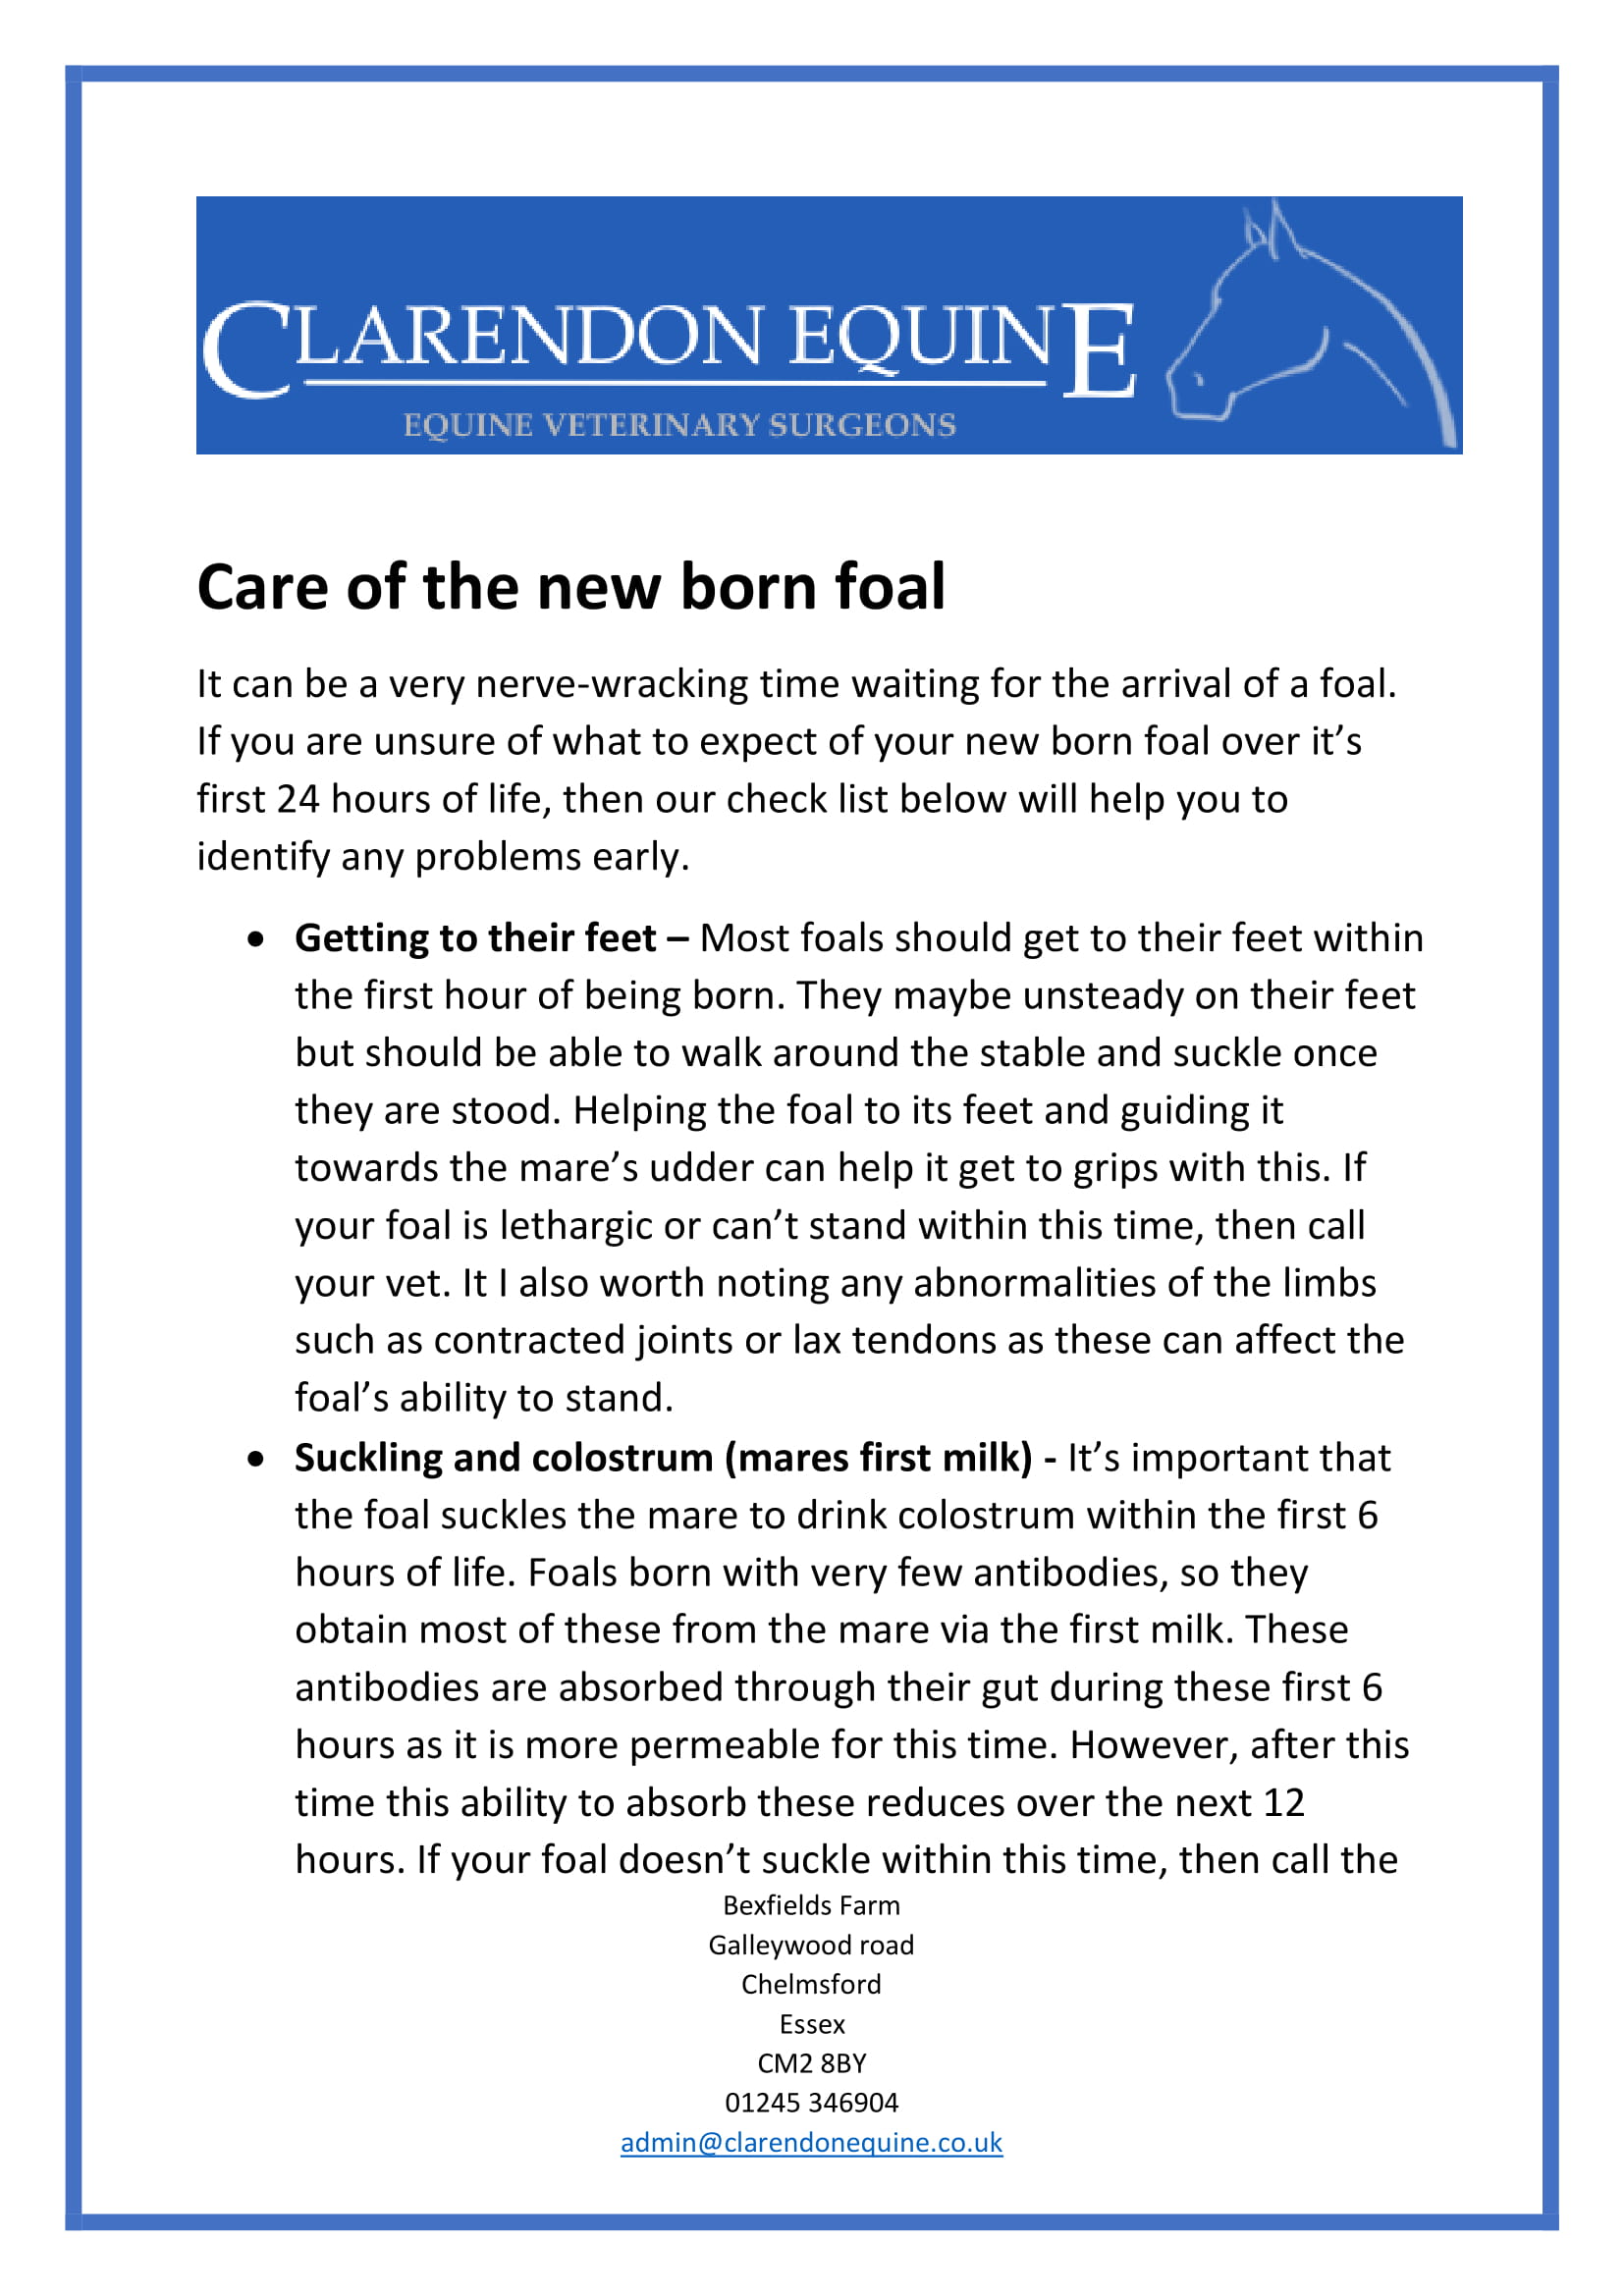 Care of the newborn foal factsheet